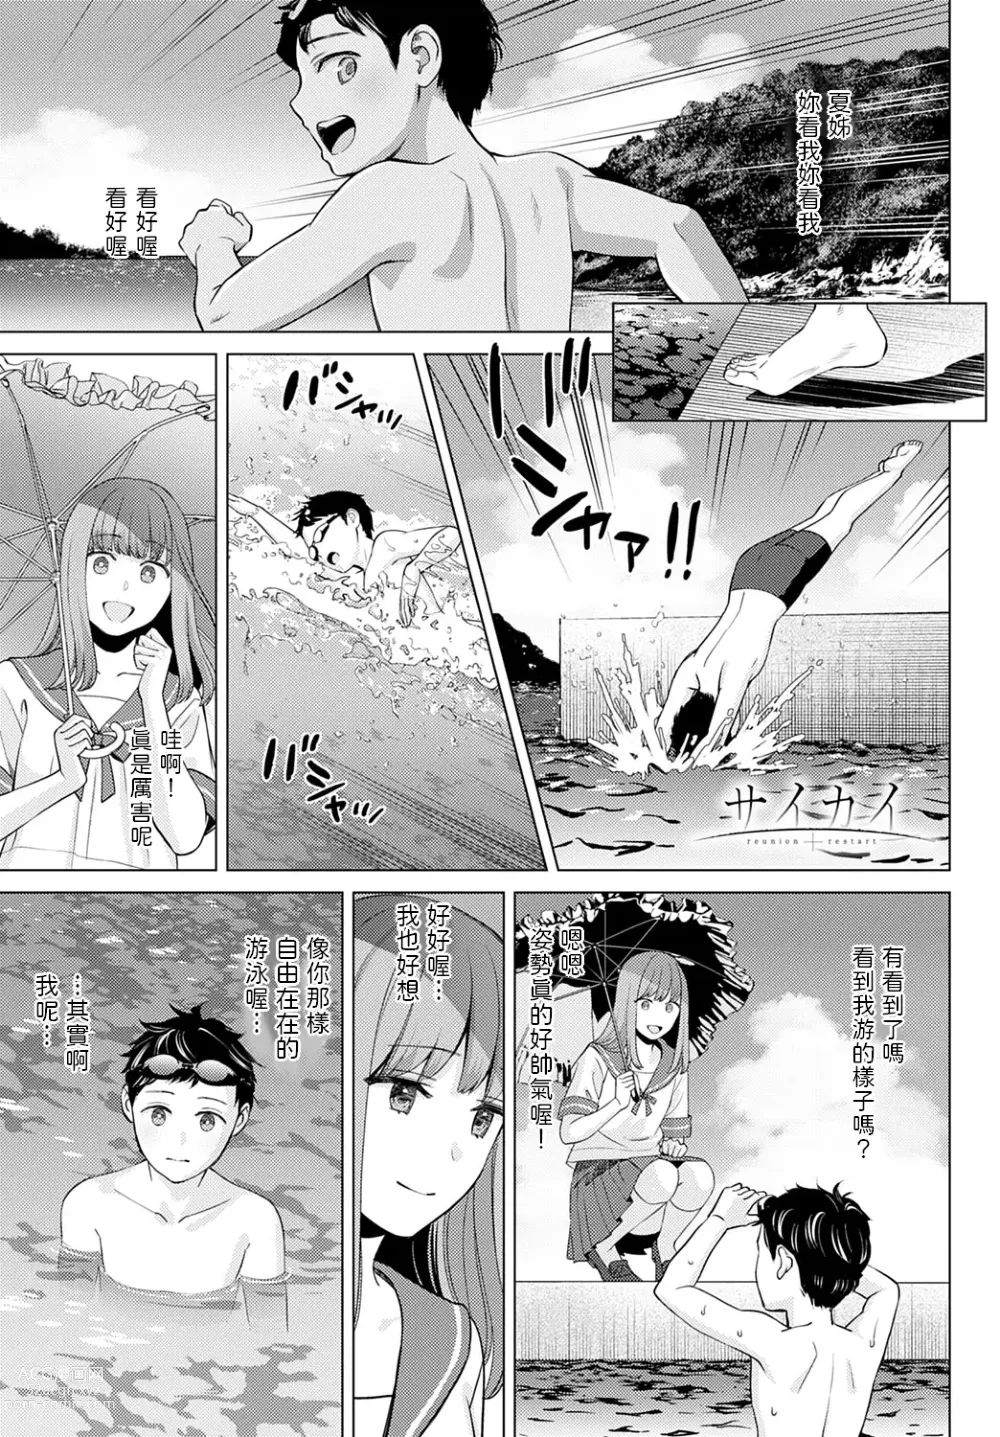 Page 1 of manga Saikai - reunion + restart